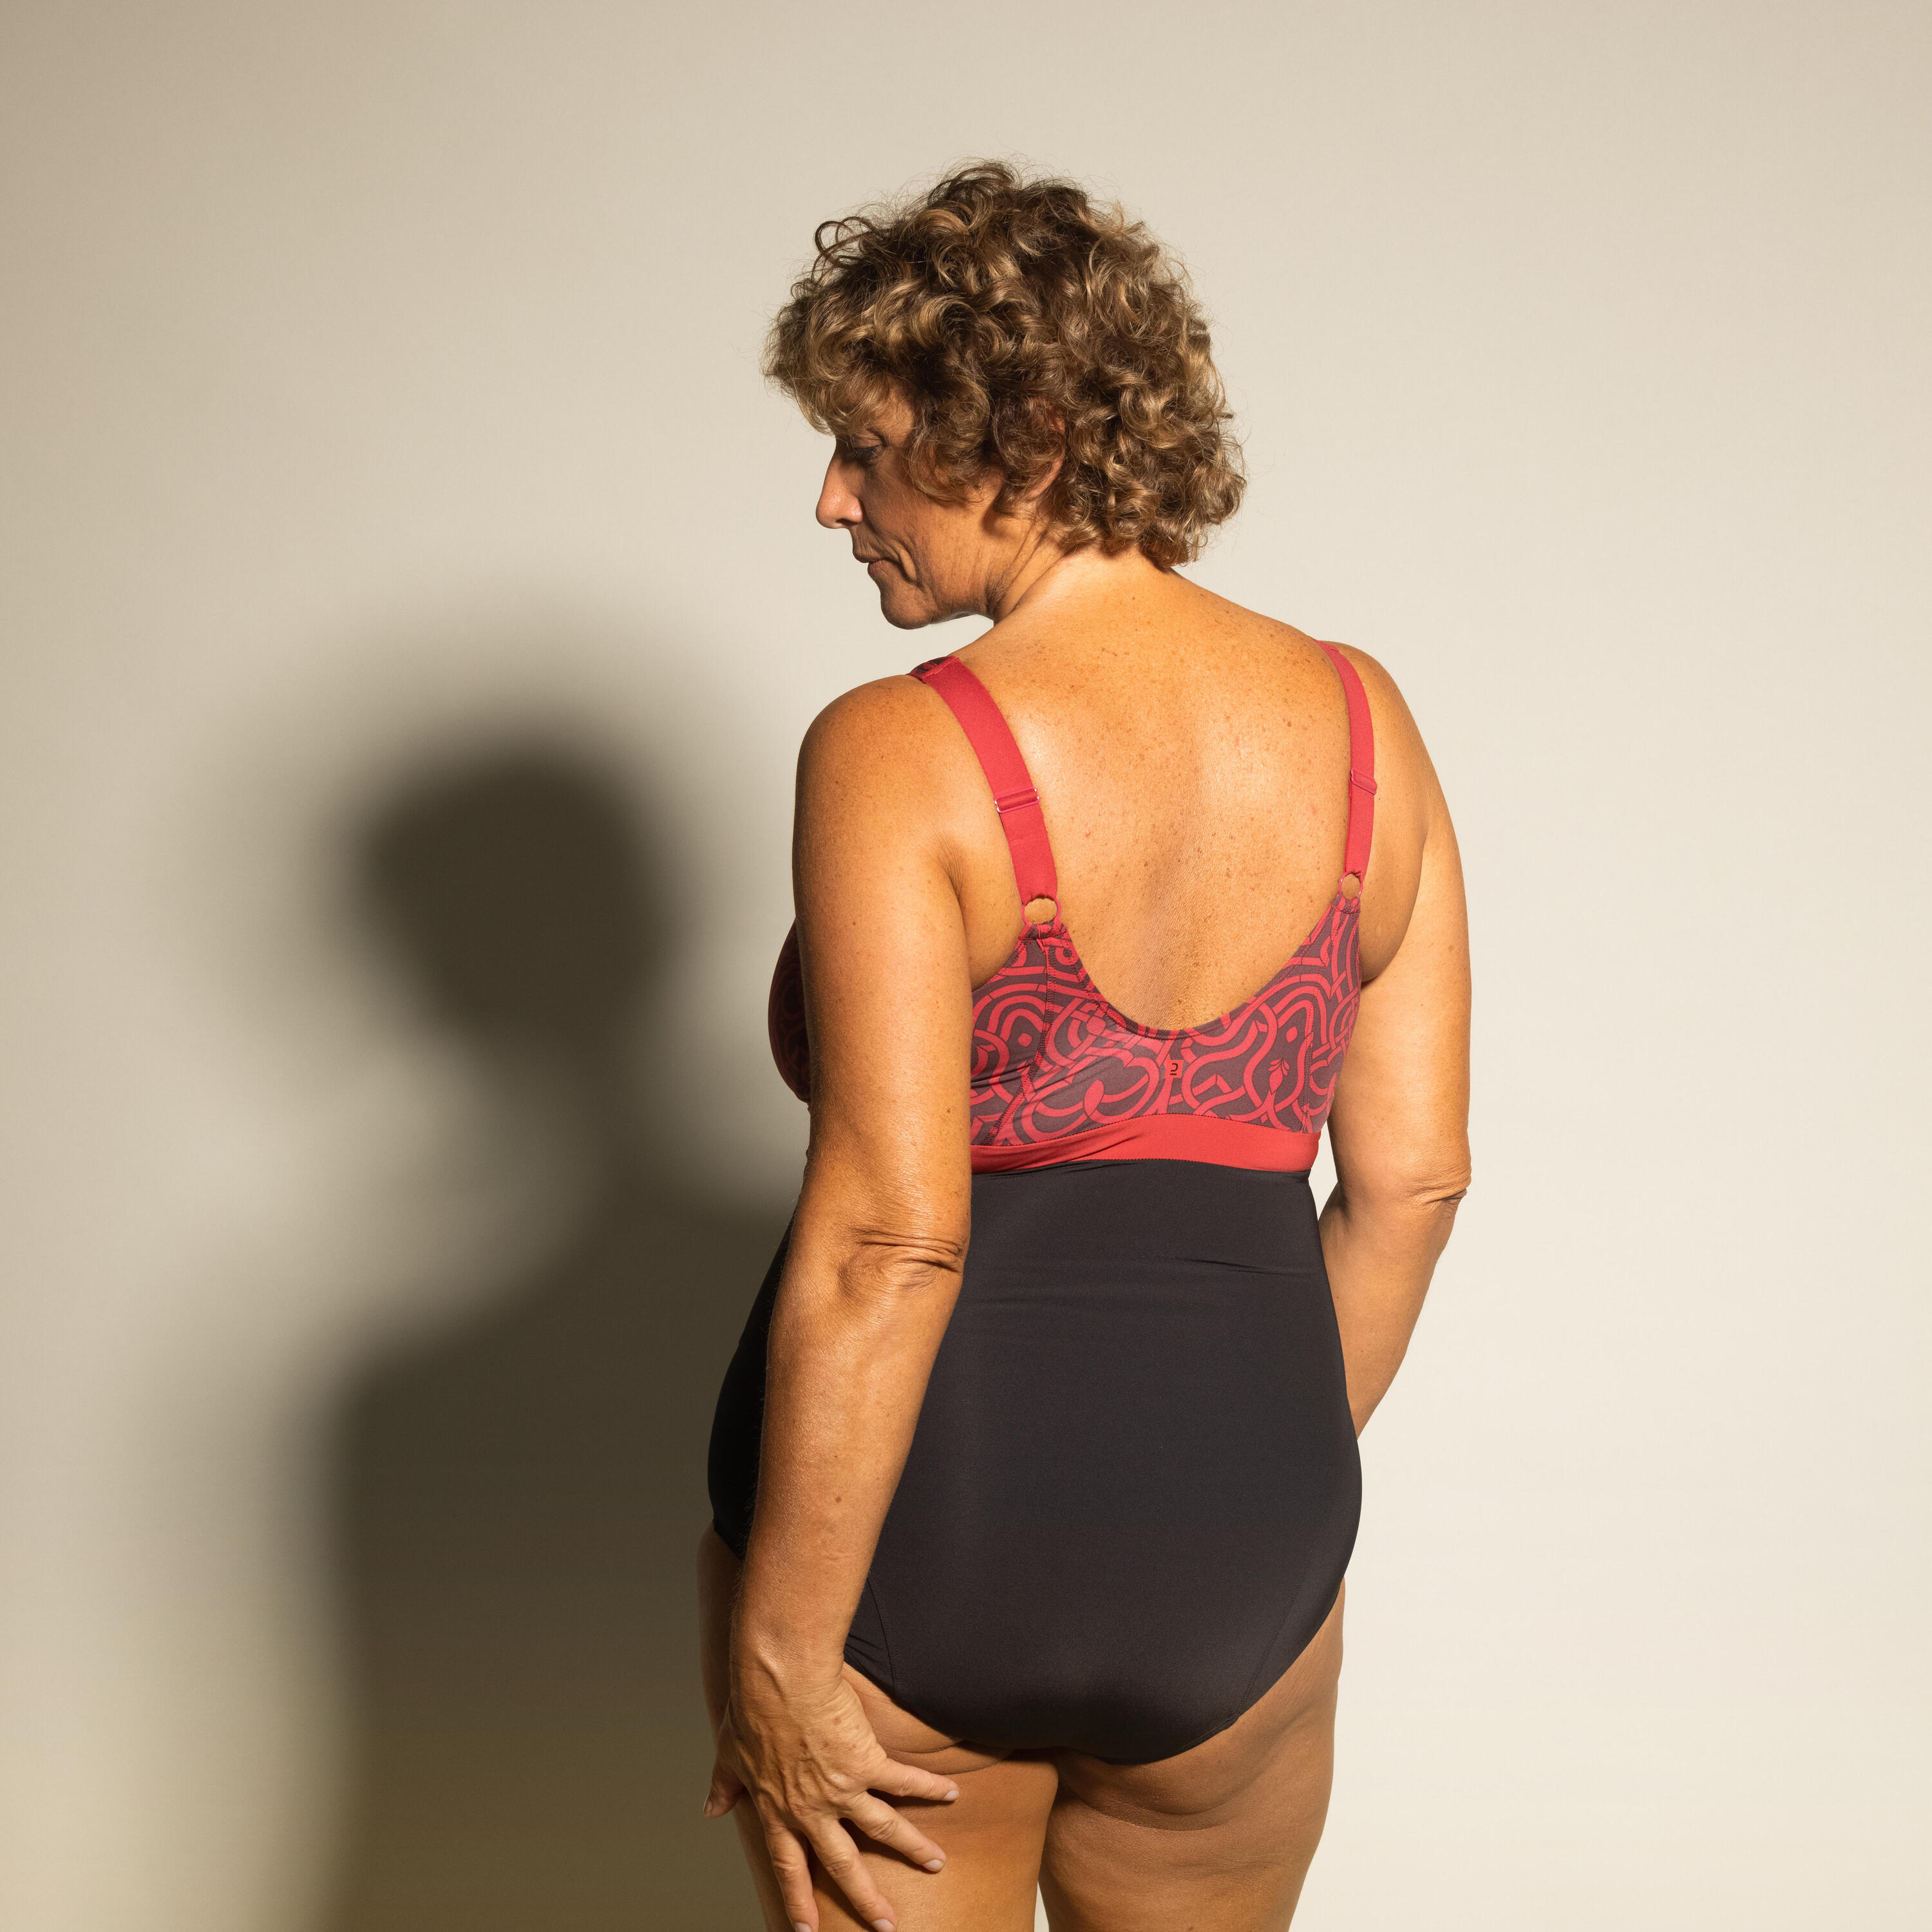 Women's 1-piece aquafitness swimsuit Cera black burgundy. Cup size D/E 4/17